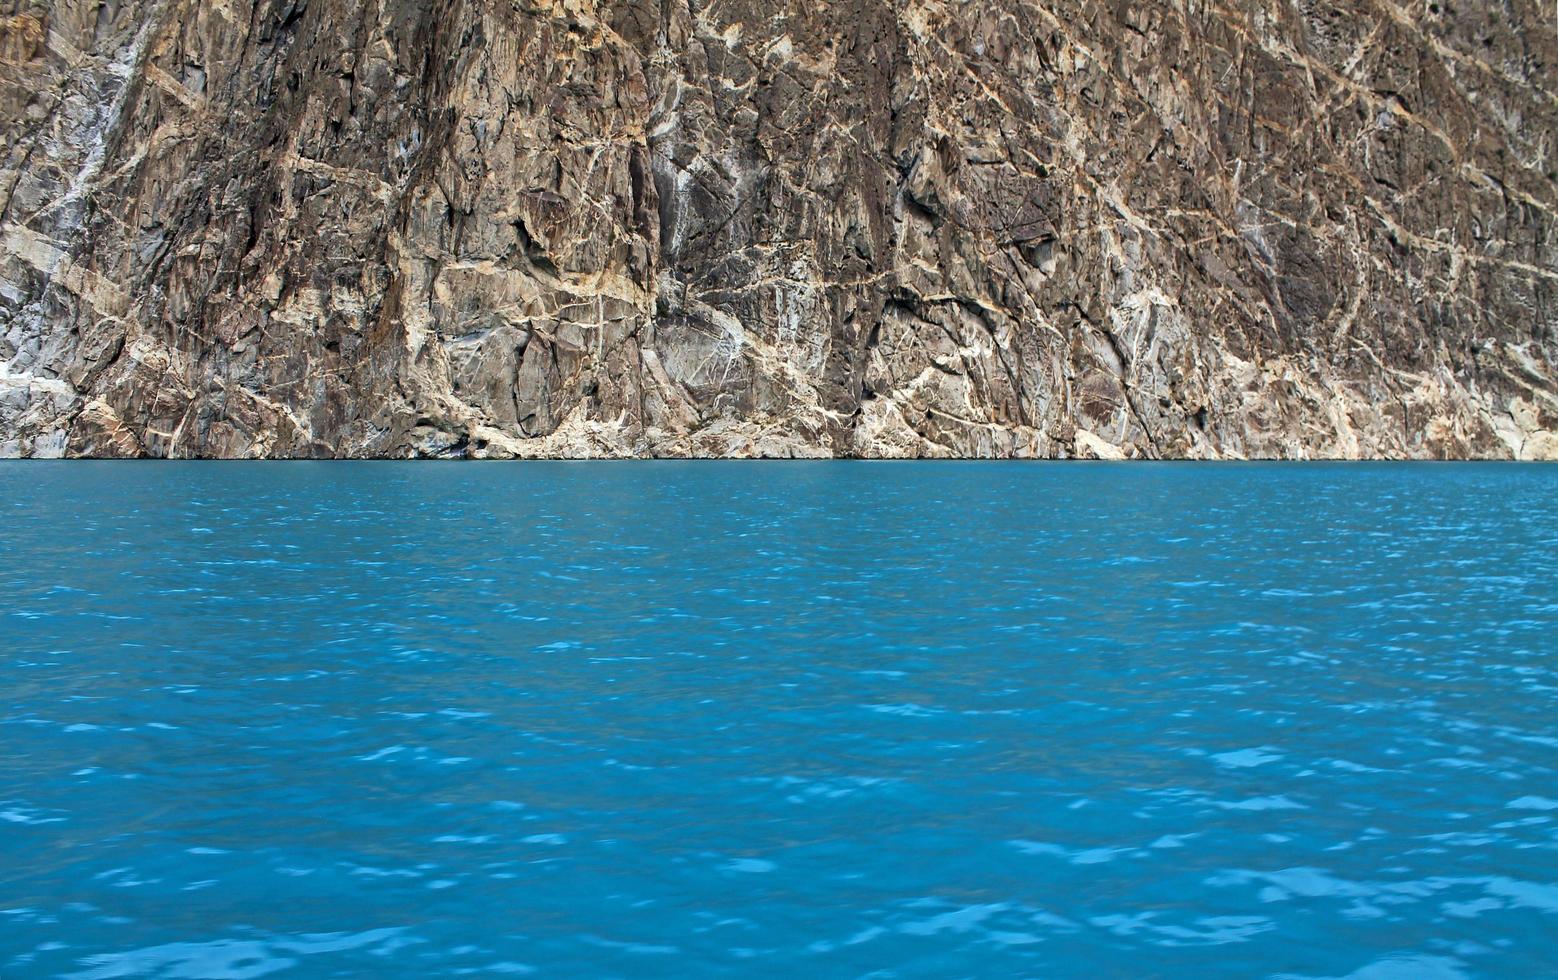 ataabad meer mooi blauw water hunza gilgit sust foto